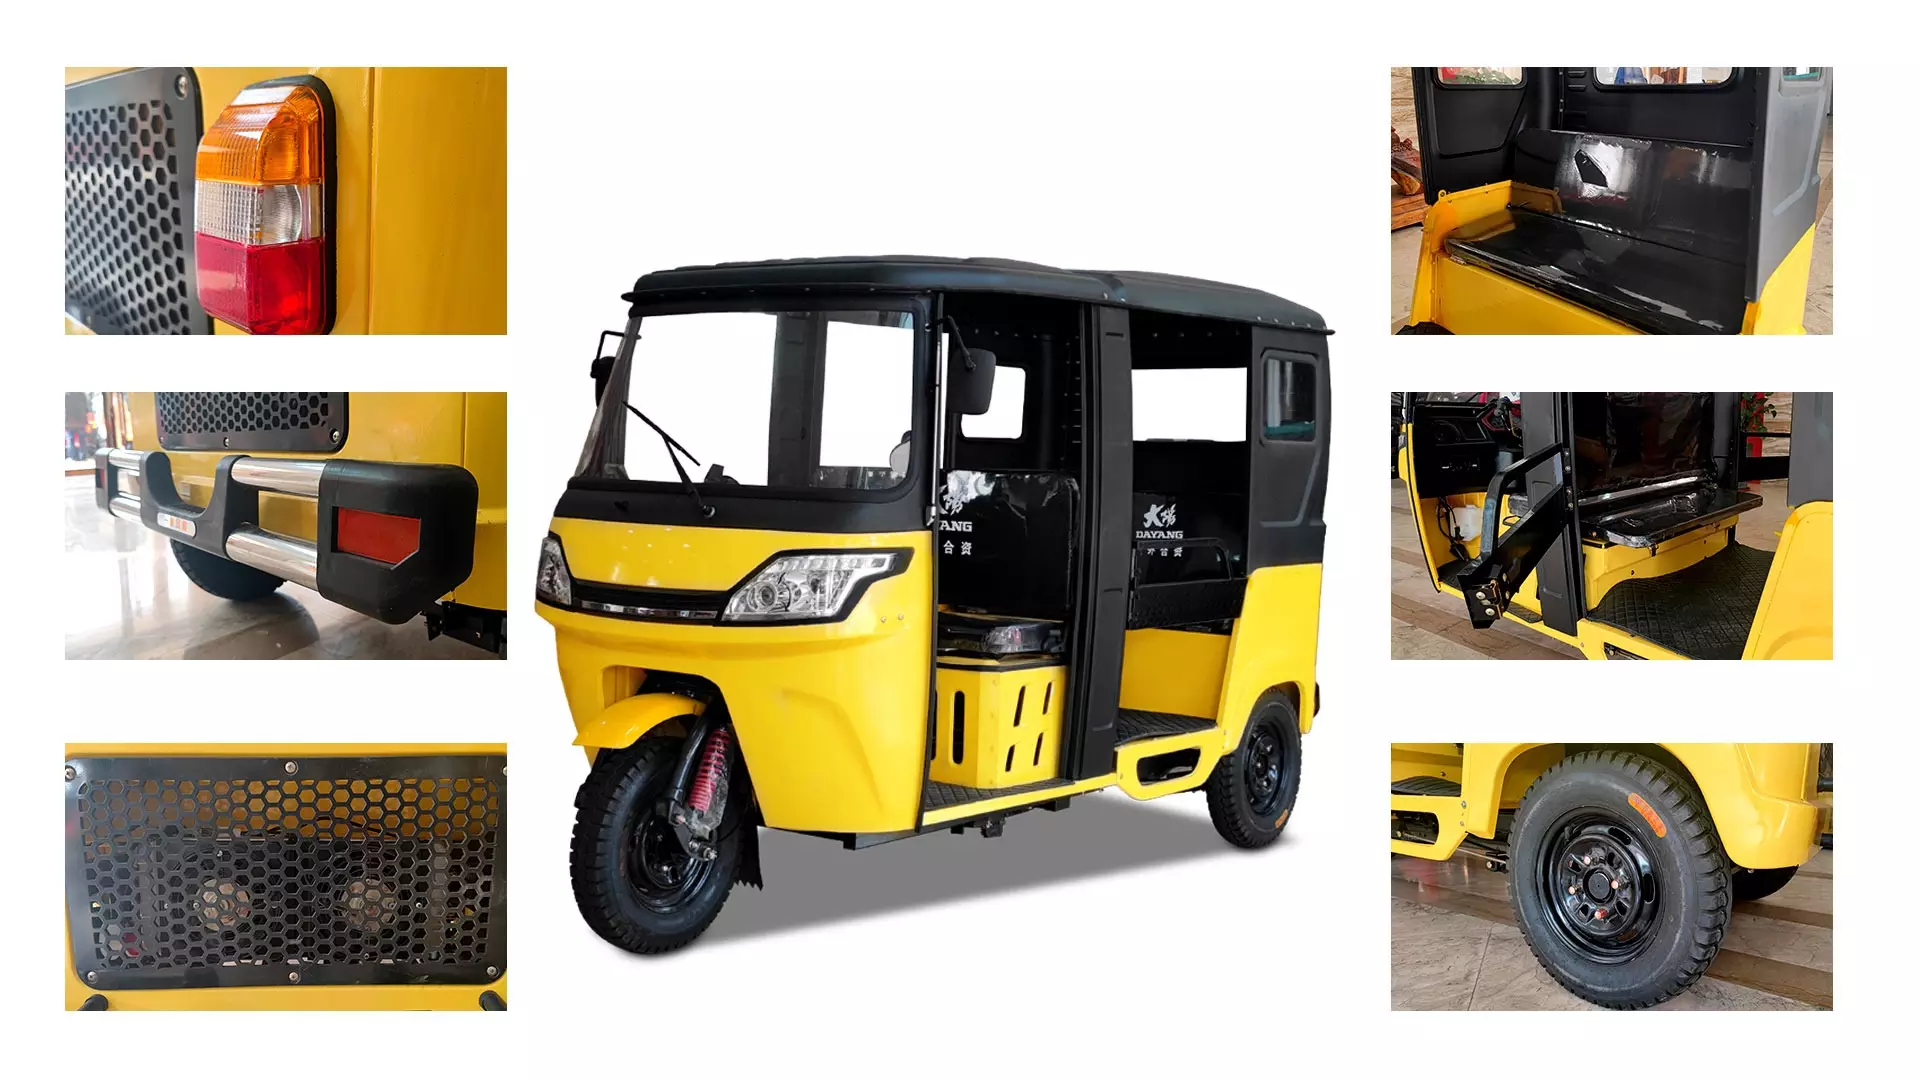 Taxi Bajaj Three Wheeler Auto Rickshaw Price Motorized 4 Stroke Three Wheeler 6 Passengers Tricycle